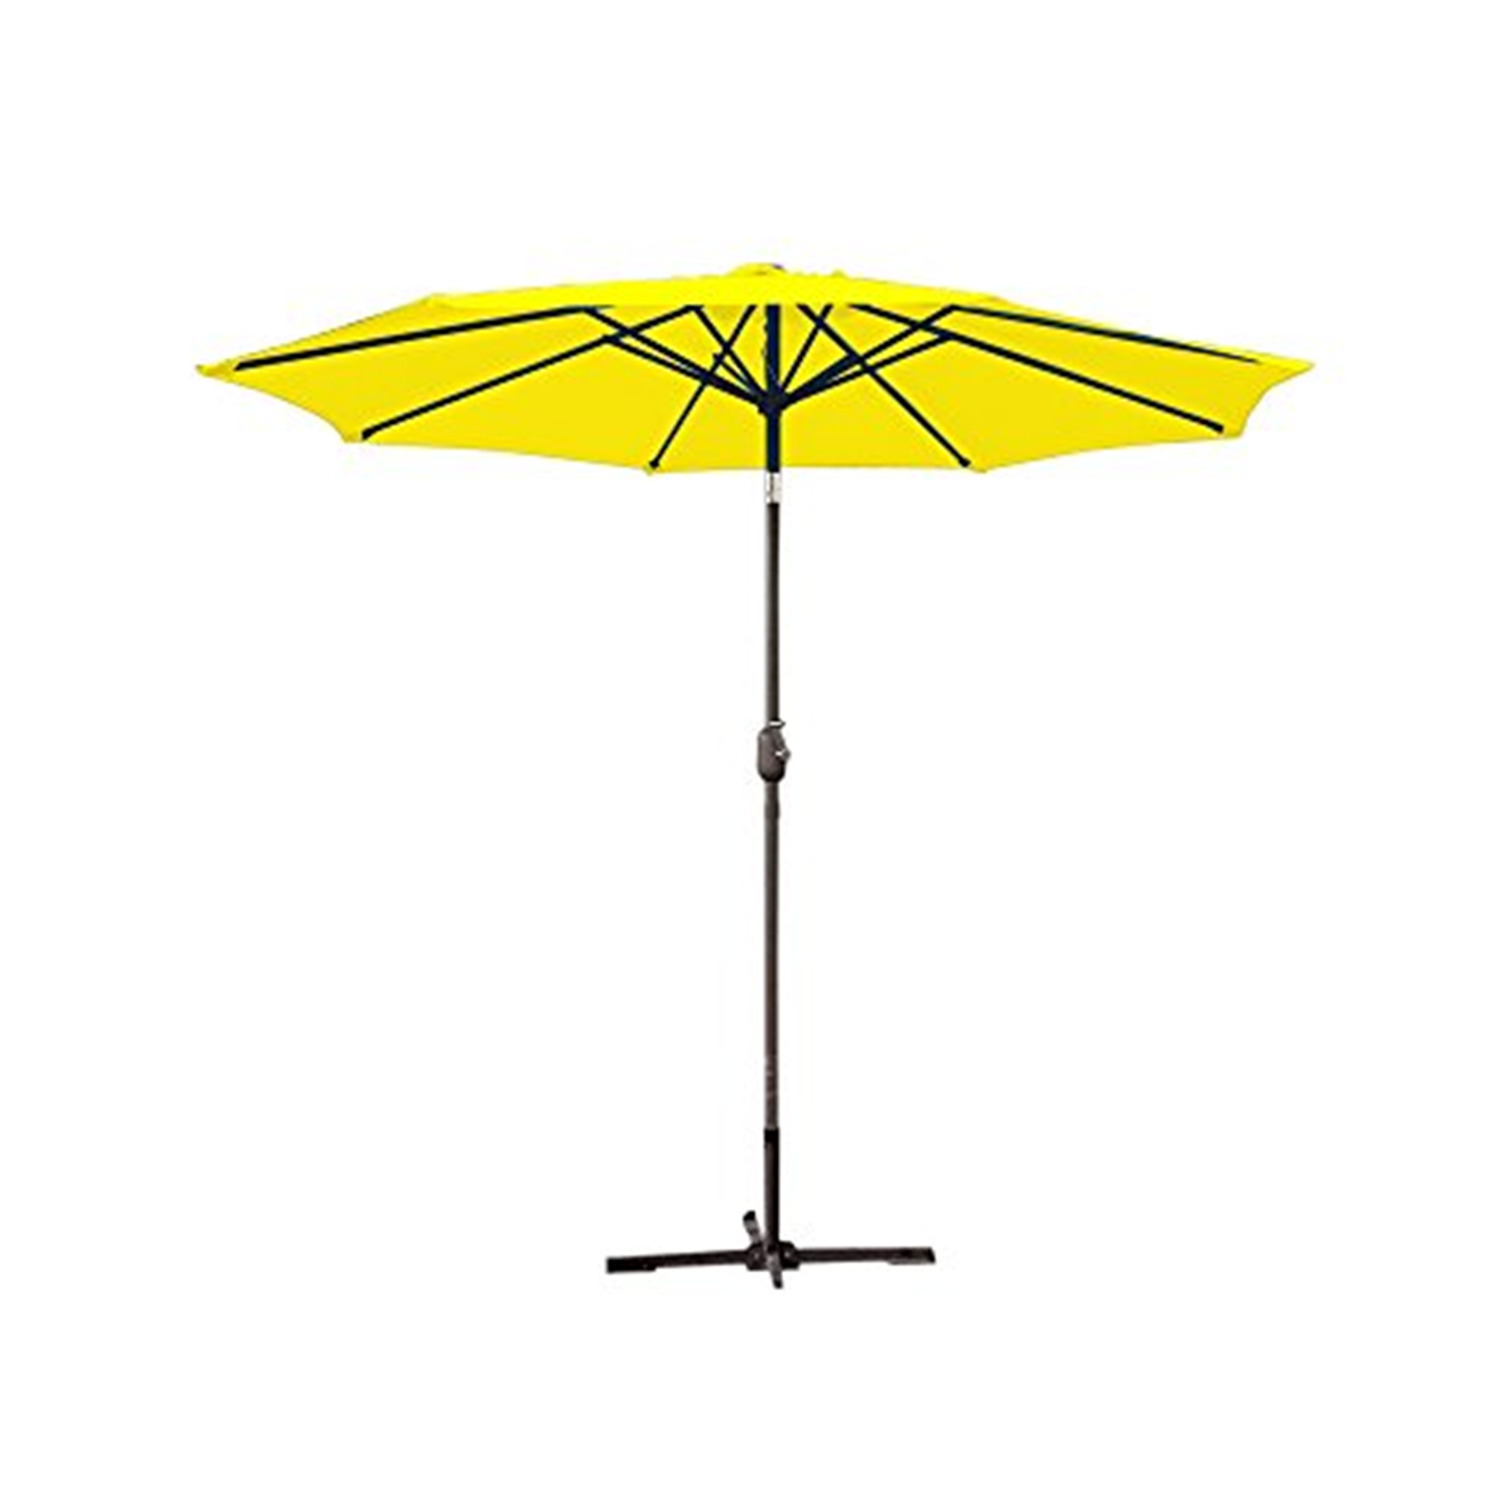 Jeco Aluminum Patio Market Umbrella Tilt w/ Crank - Grey Pole-Color:Yellow,Size:9' - image 1 of 1